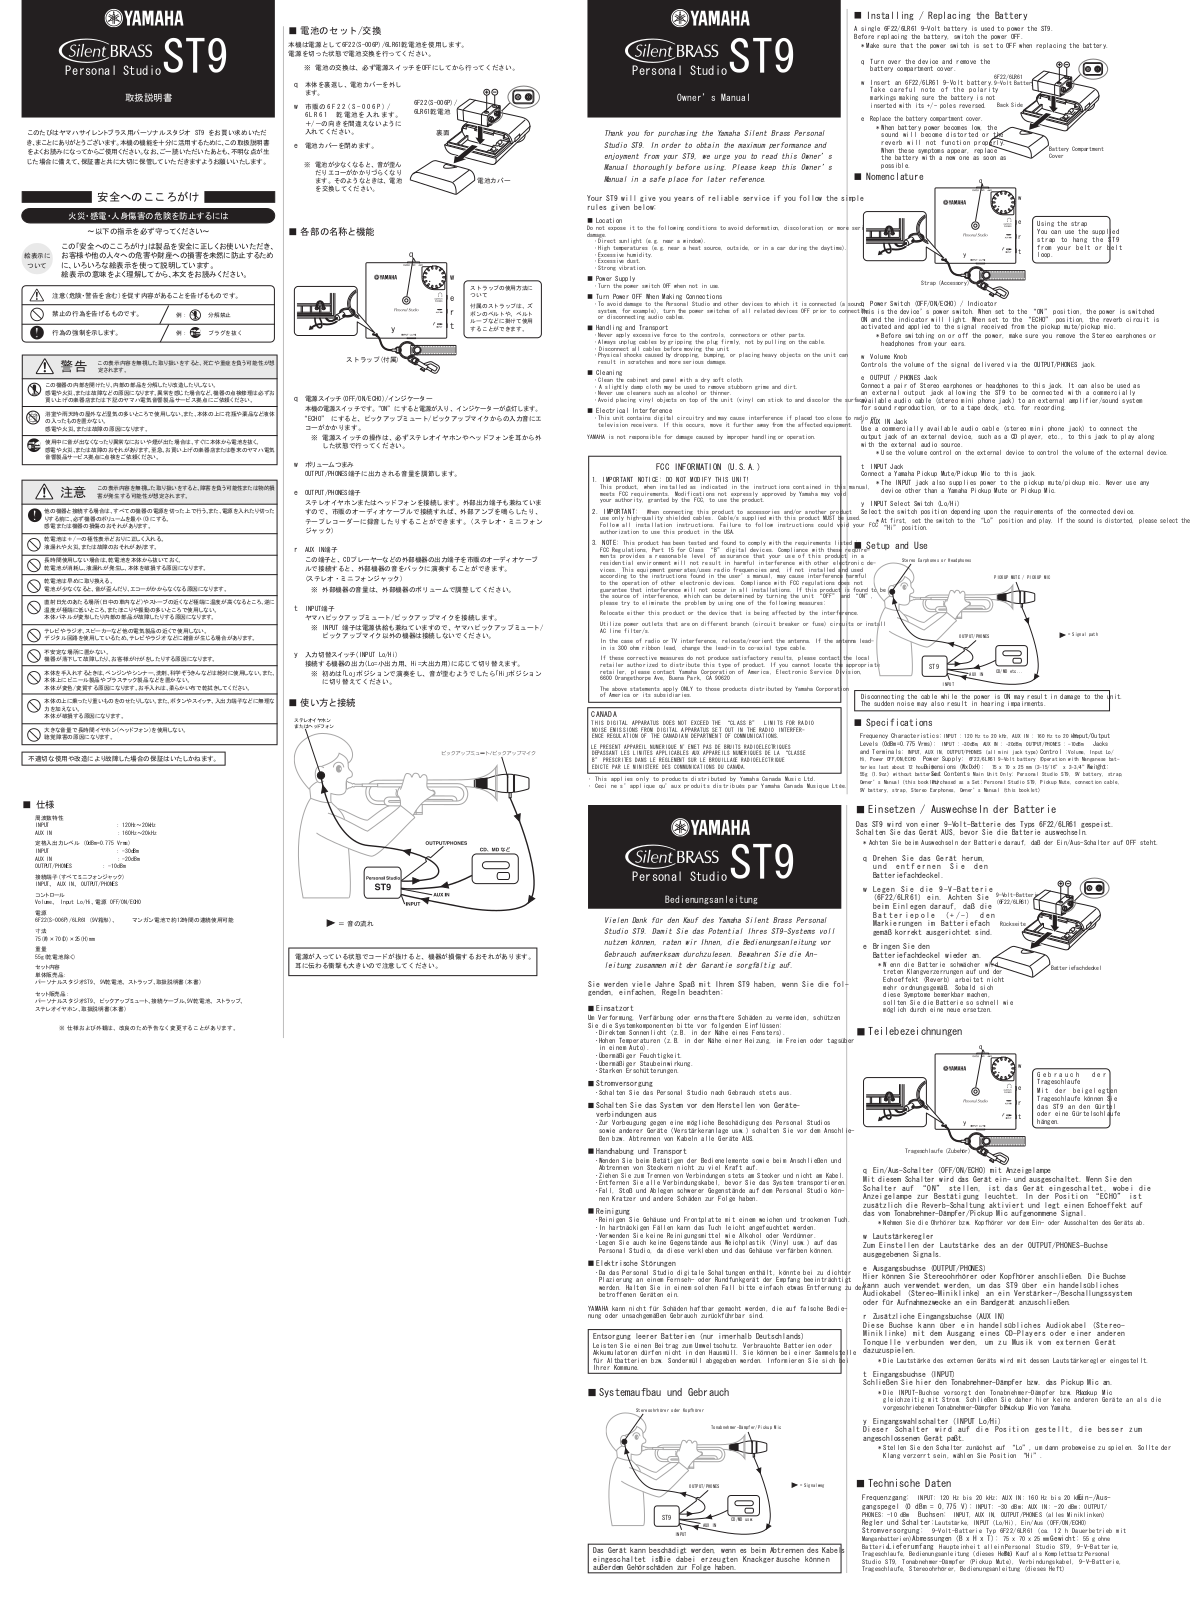 Yamaha SILENT BRASS ST9 Manual